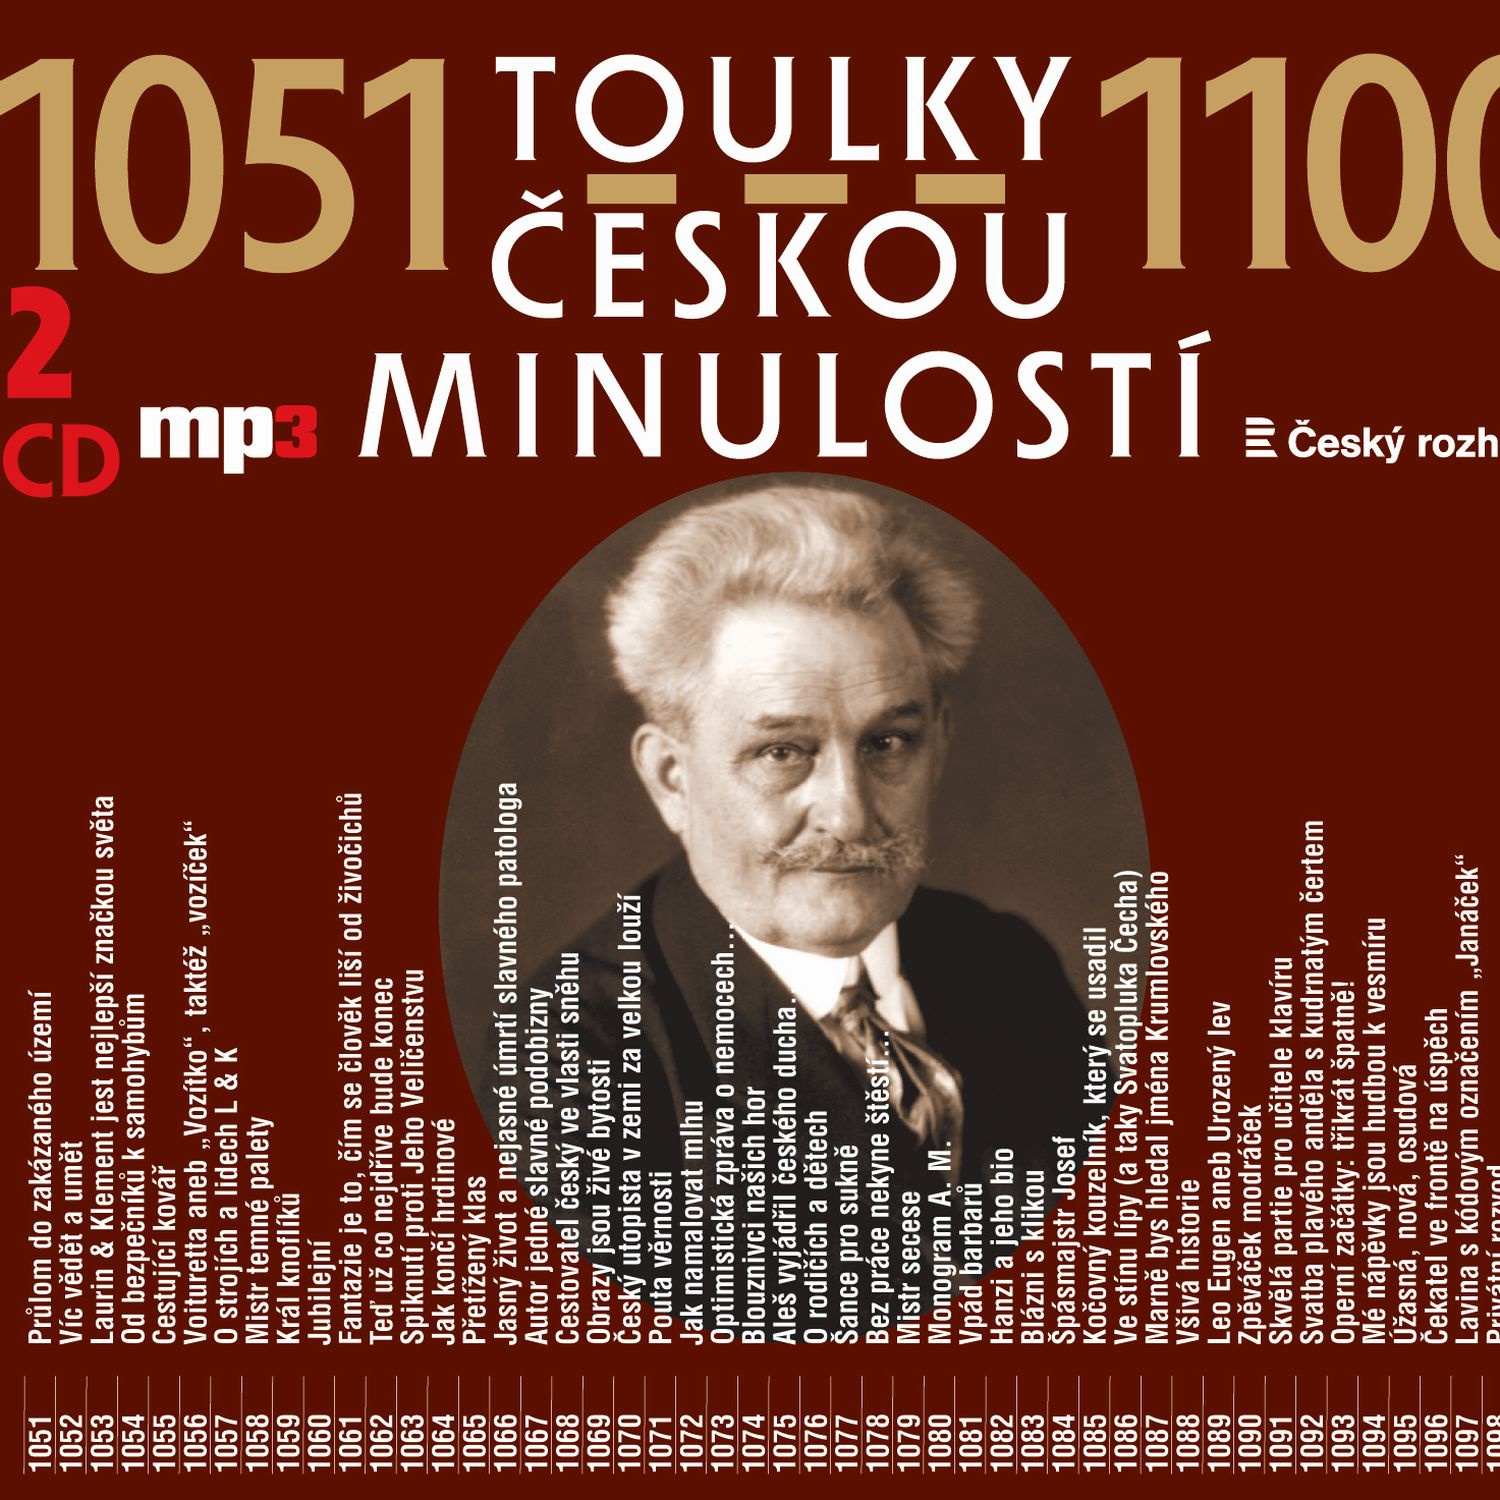 CD Shop - VARIOUS TOULKY CESKOU MINULOSTI 1051-1100 (MP